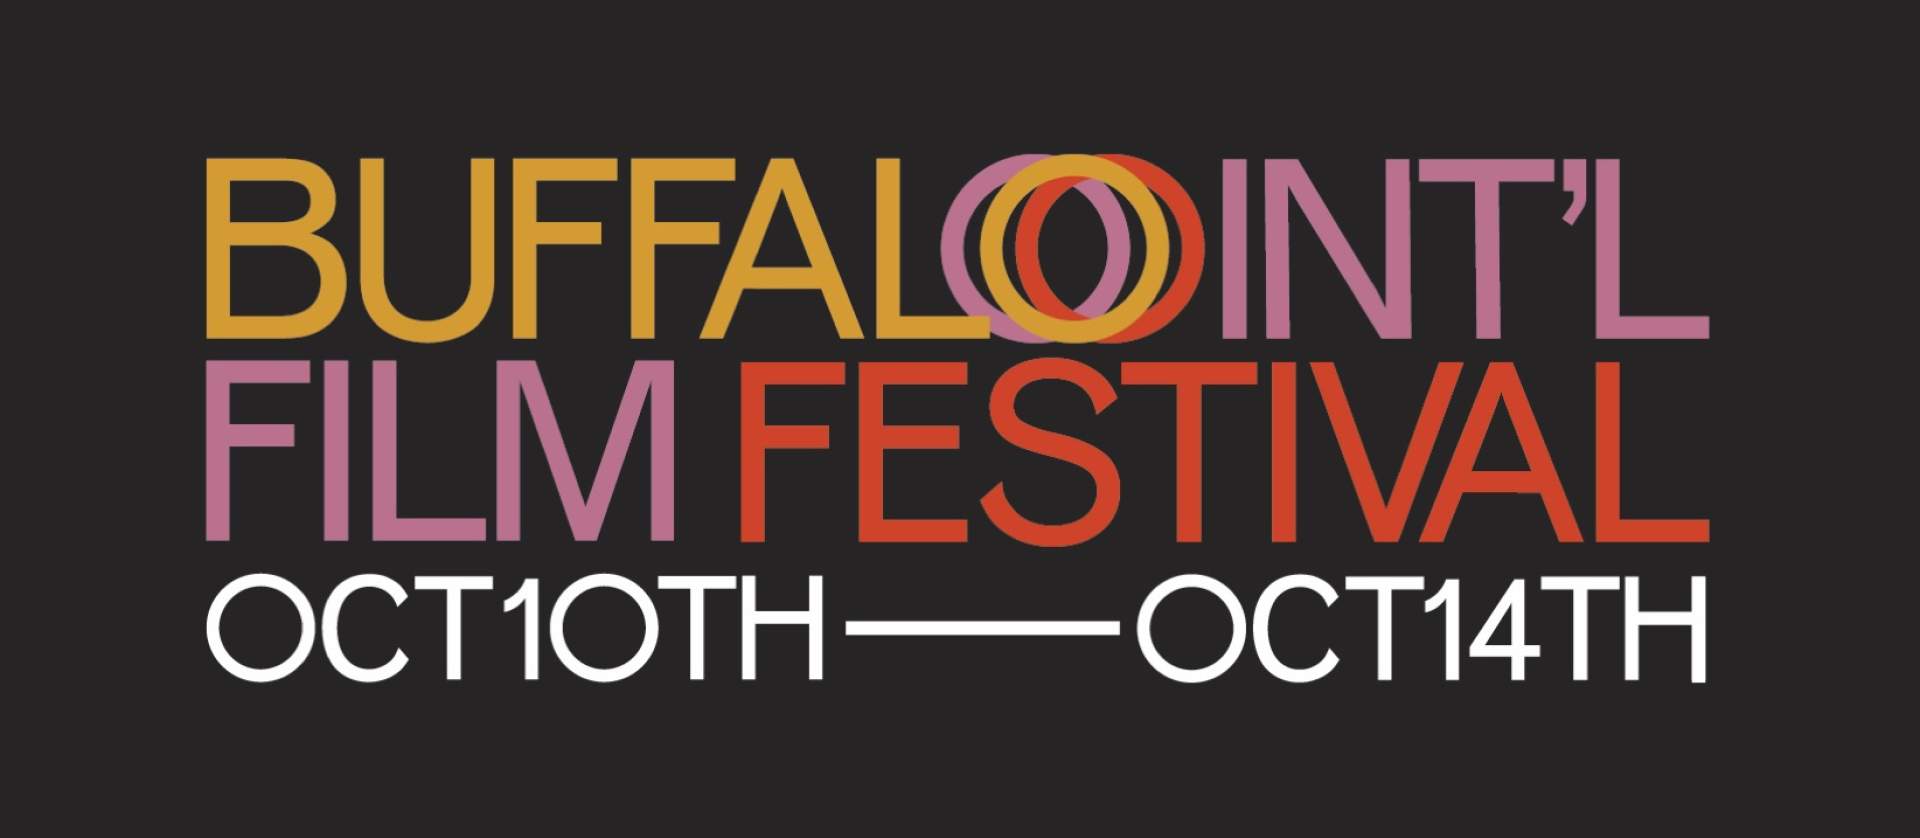 Buffalo International Film Festival 2019